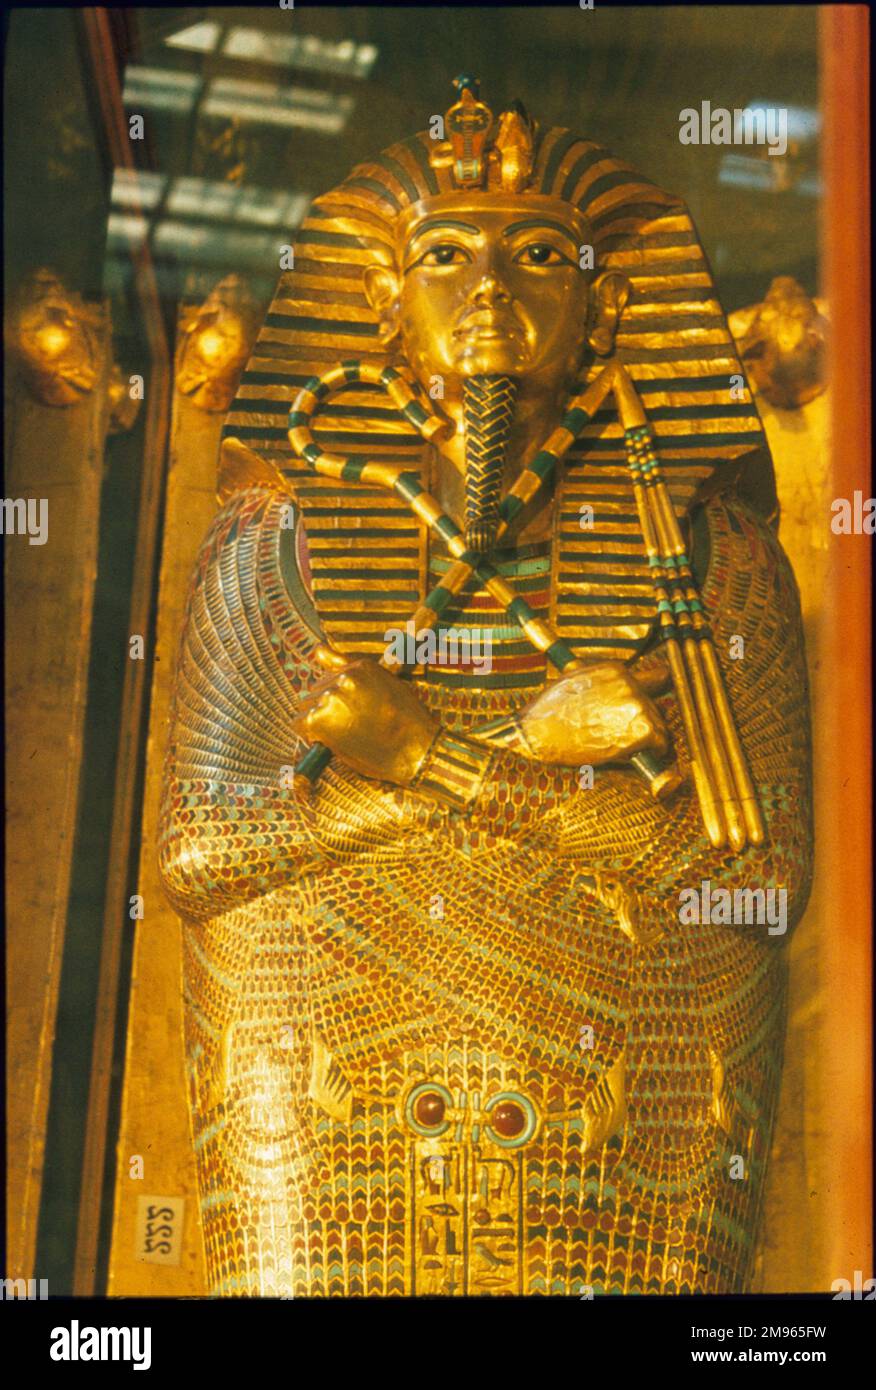 The sarcophagus of Pharoah TUTANKHAMUN, ruler of the 18th Dynasty of Egypt 1361 - 1352 BC, (Egyptian Museum, Cairo). Stock Photo